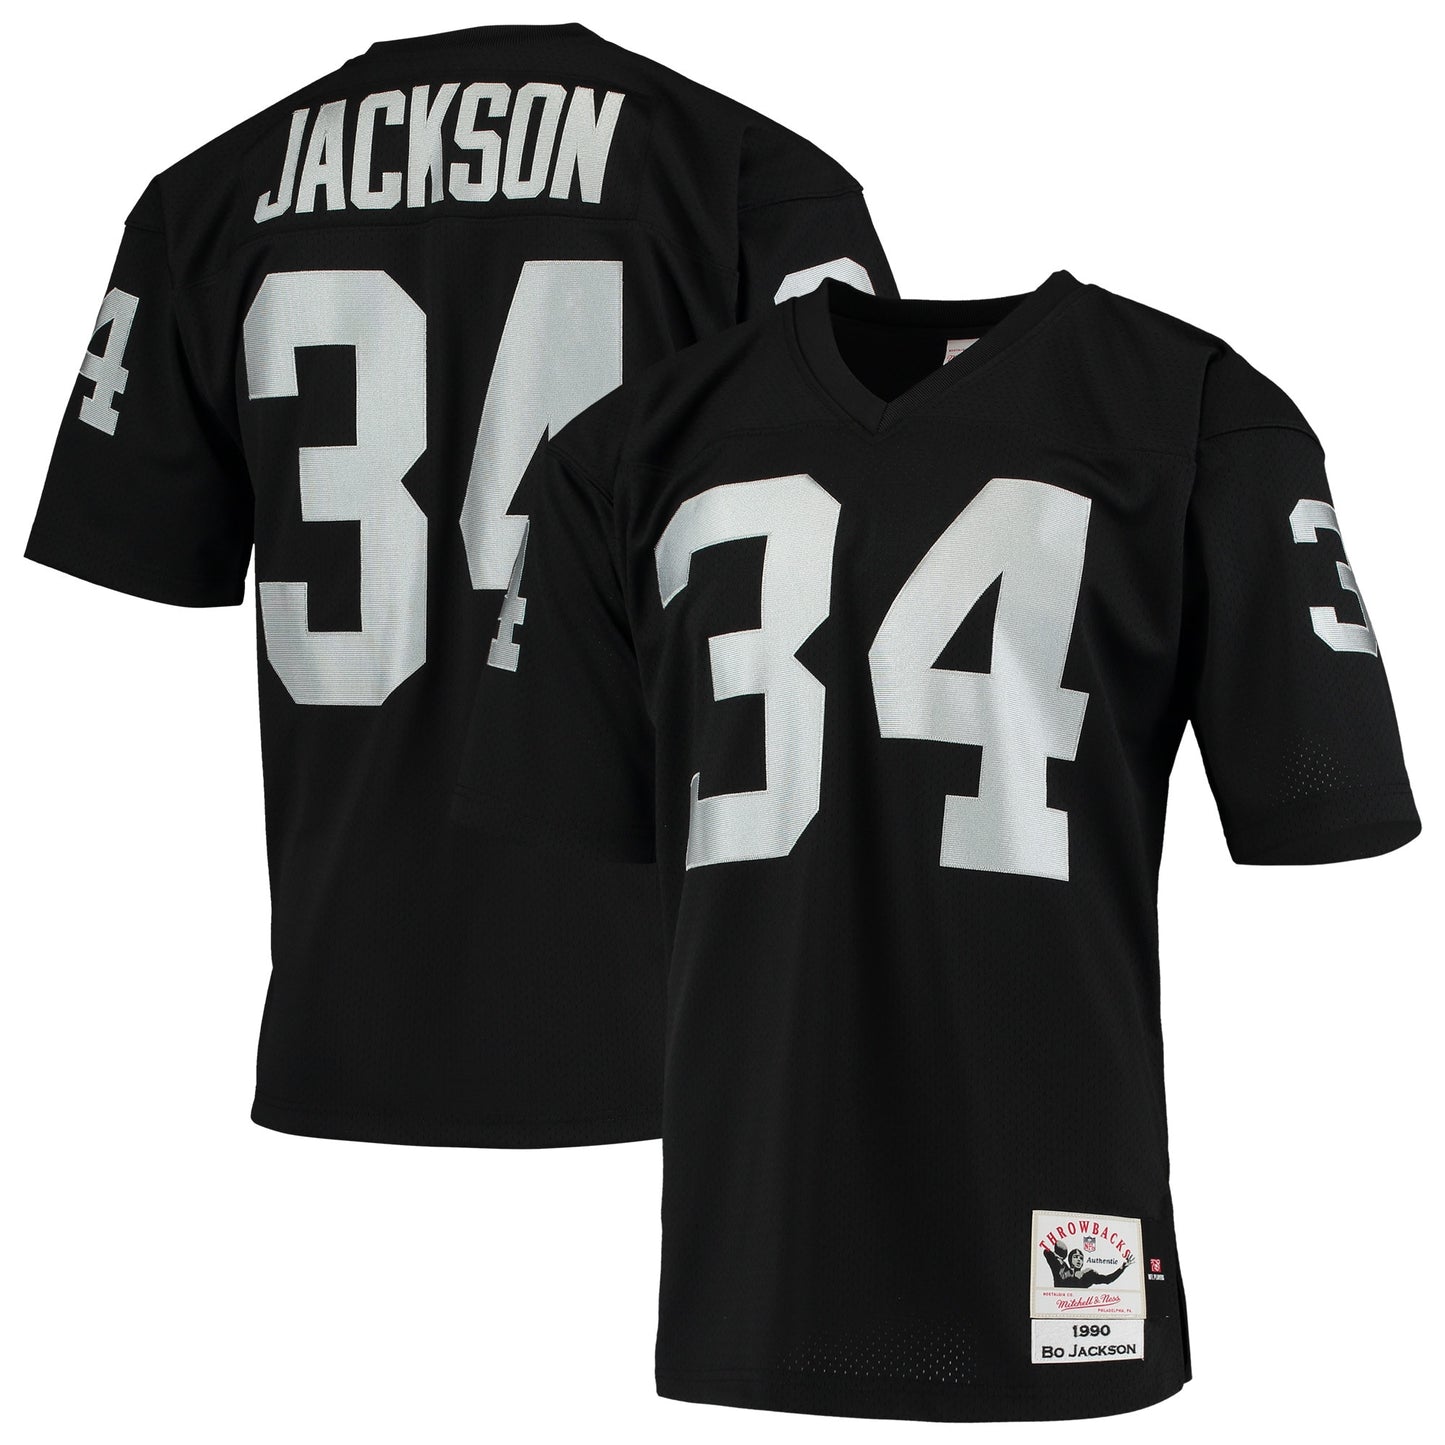 Bo Jackson Las Vegas Raiders Mitchell & Ness 1990 Authentic Throwback Retired Player Jersey - Black